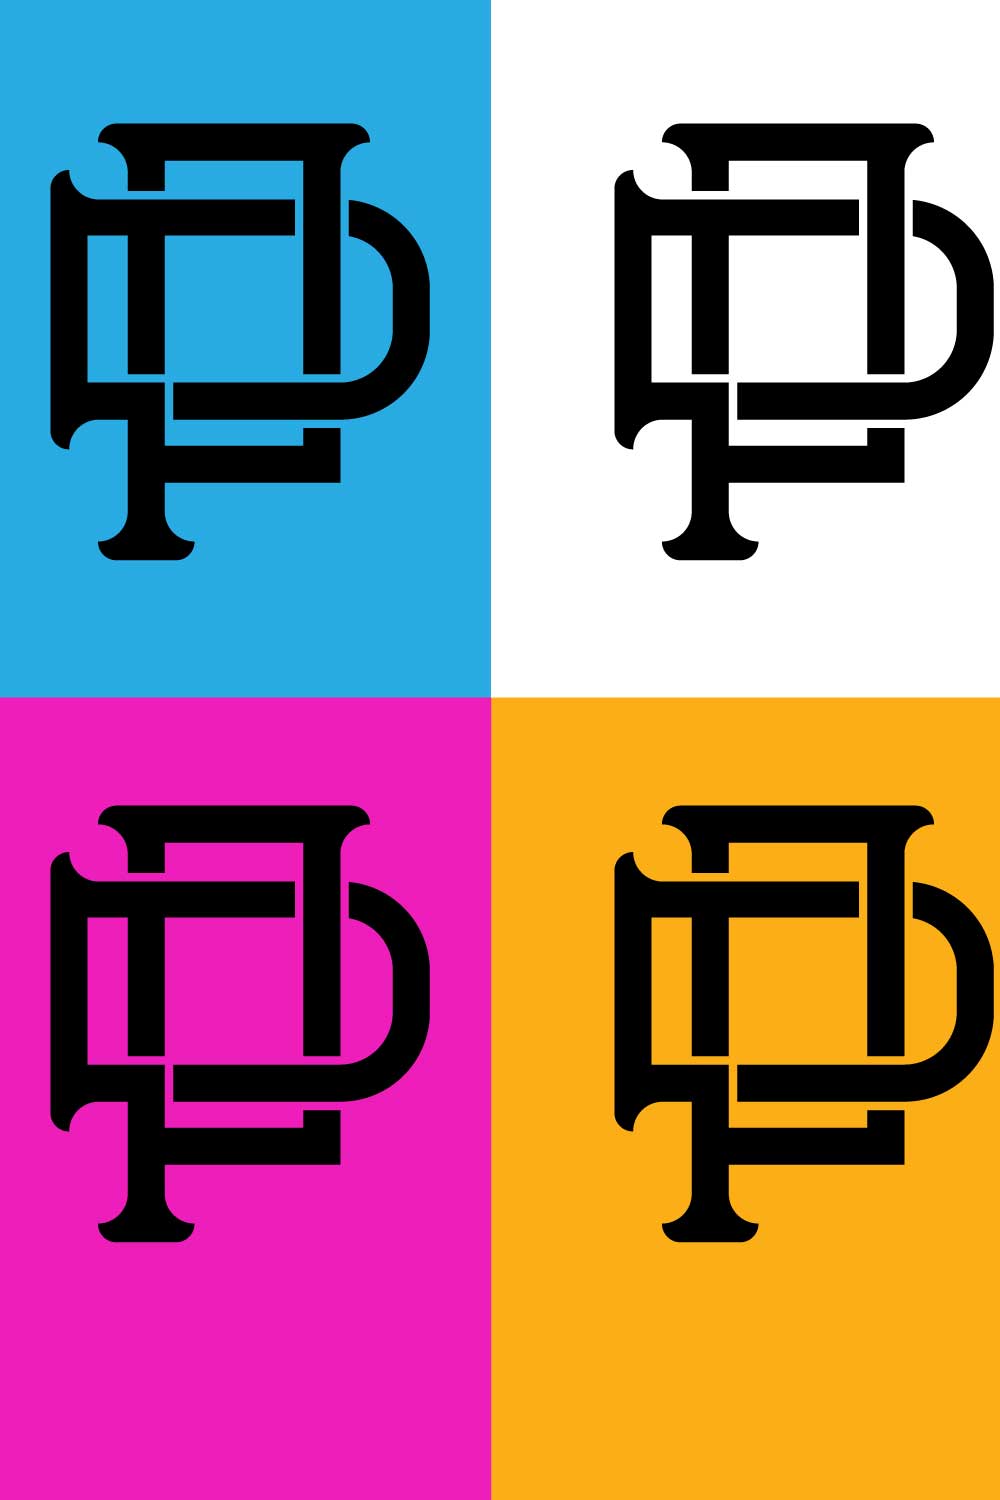 PD letter logo SVG/ PNG/ Ai/ EPS pinterest preview image.